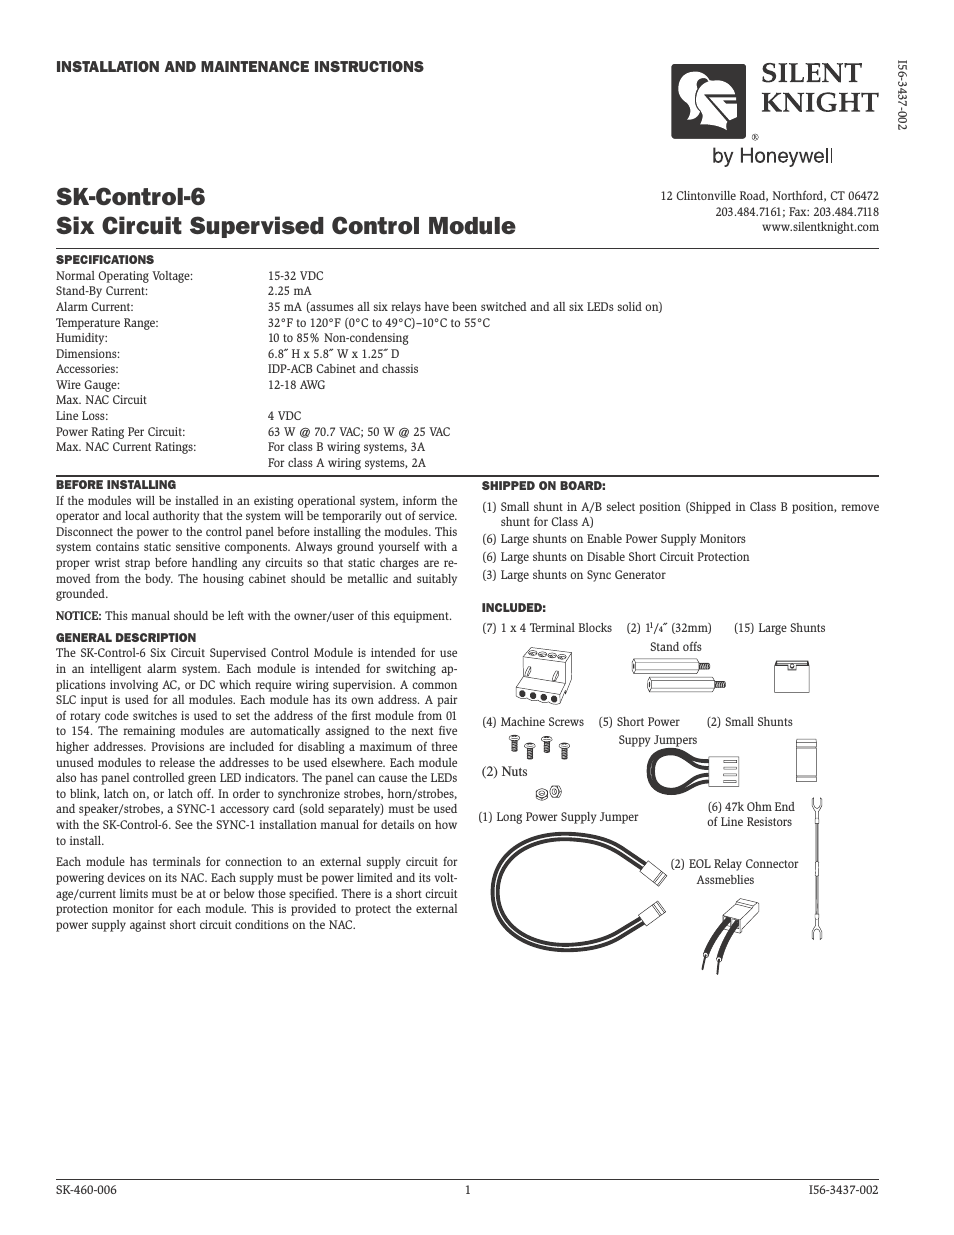 SK-Control-6 Six Circuit Notification Module